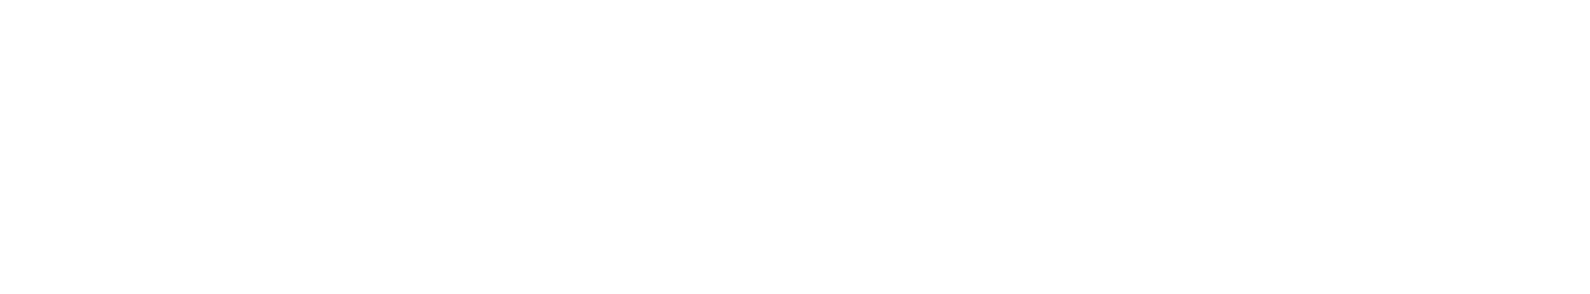 Meggitt Logo groß für dunkle Hintergründe (transparentes PNG)